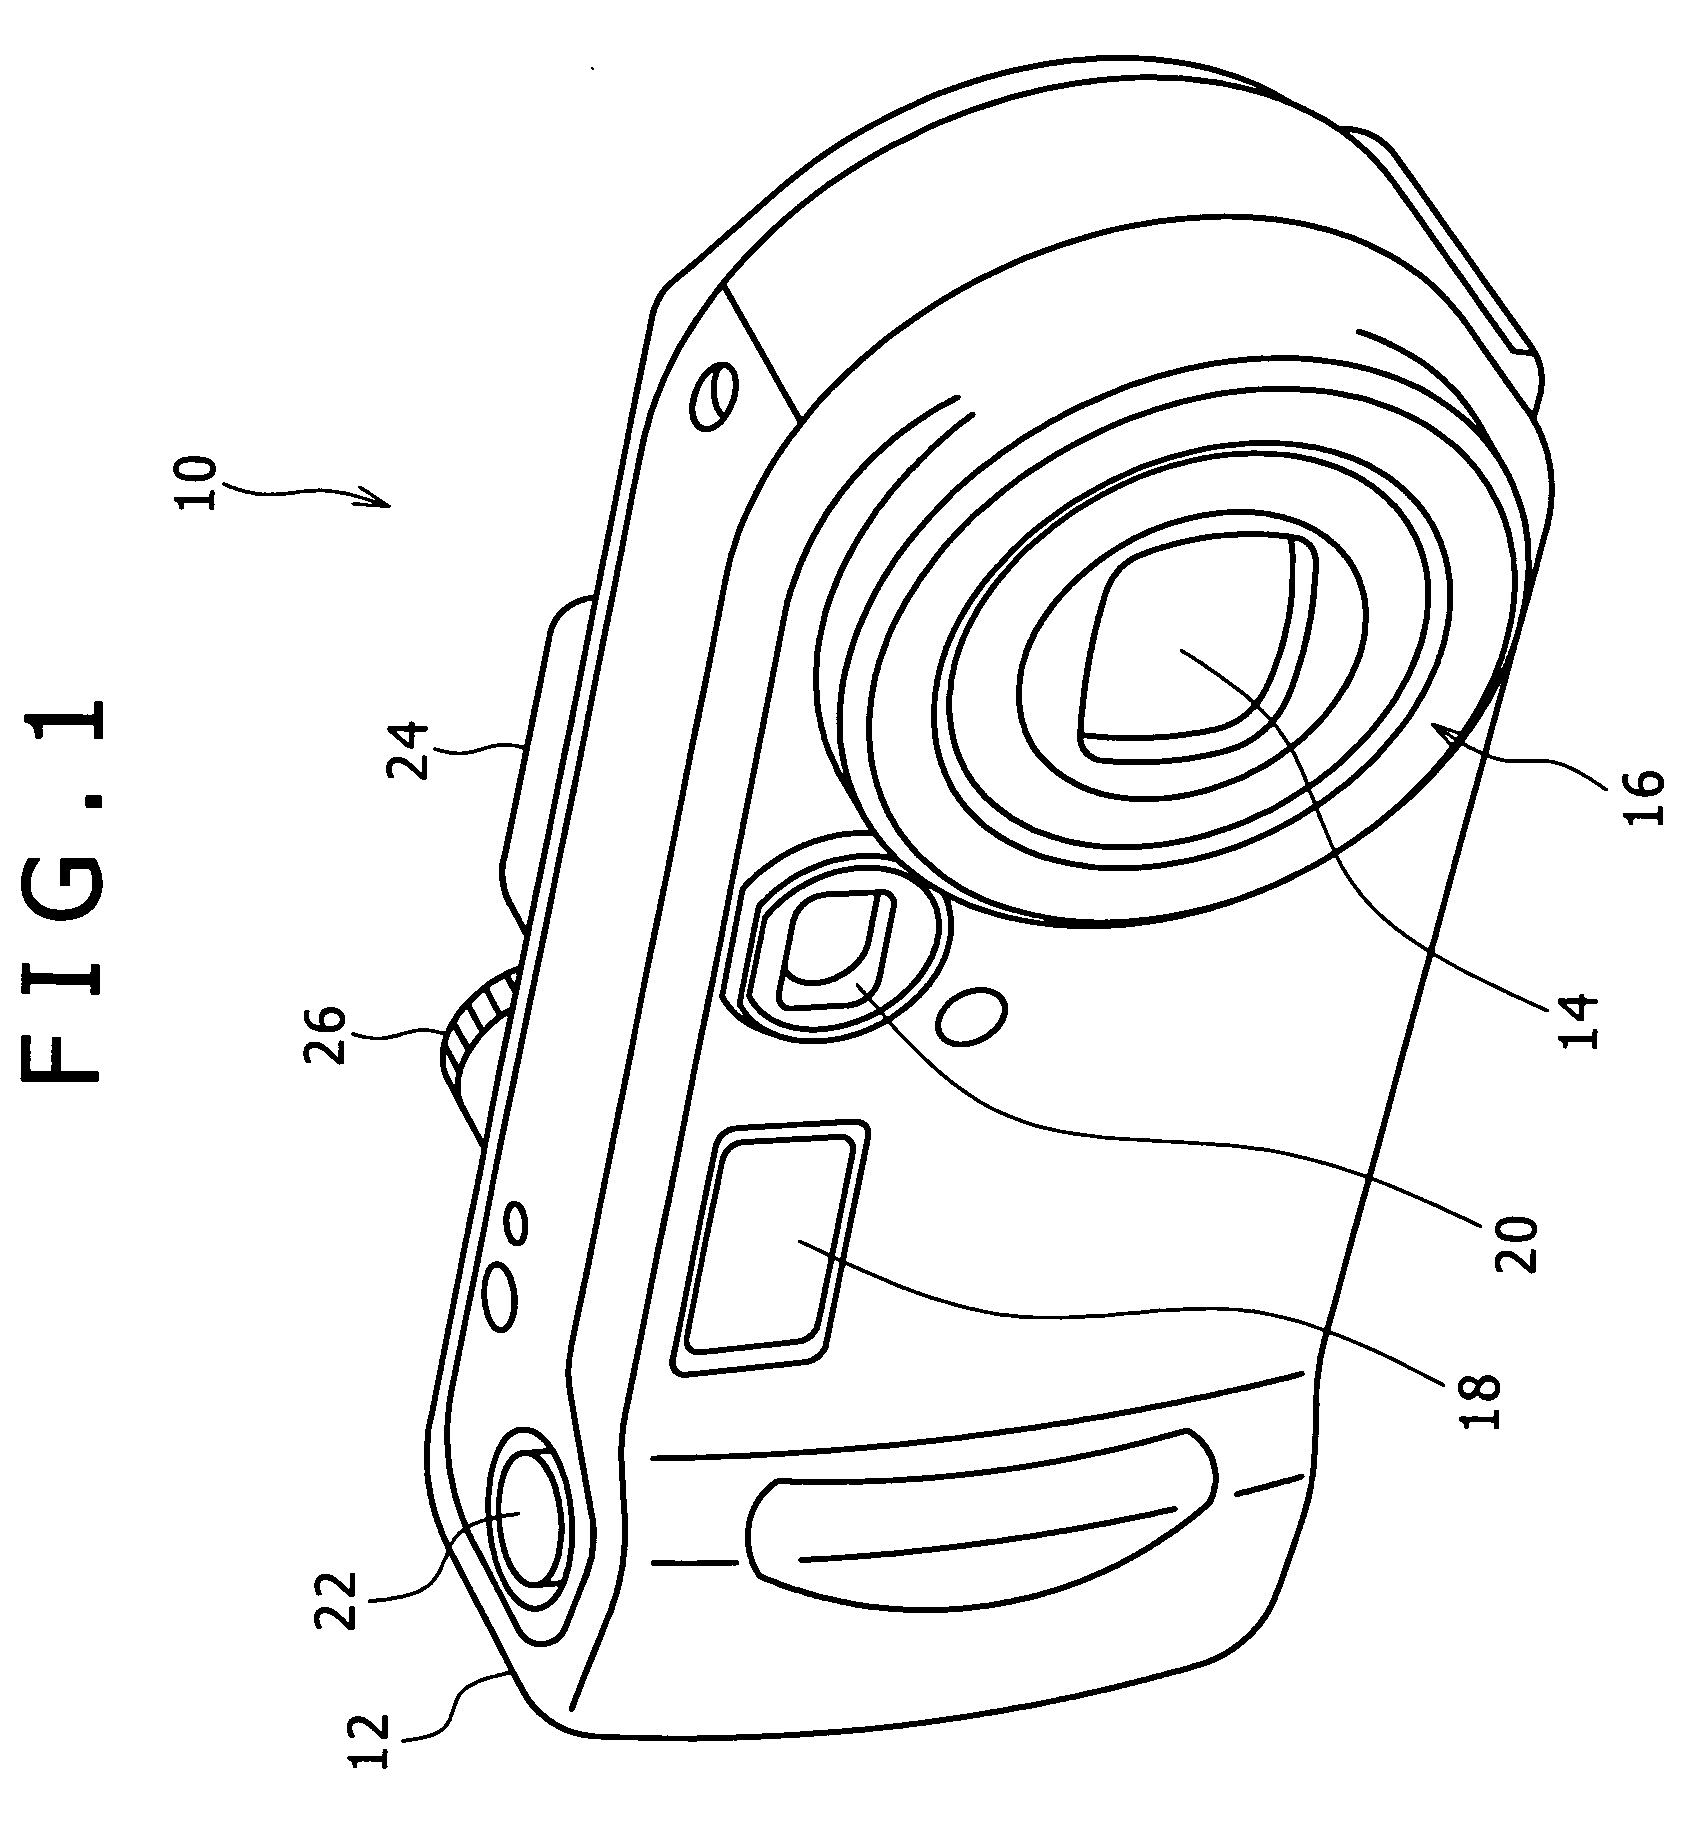 Lens barrel and image pickup apparatus